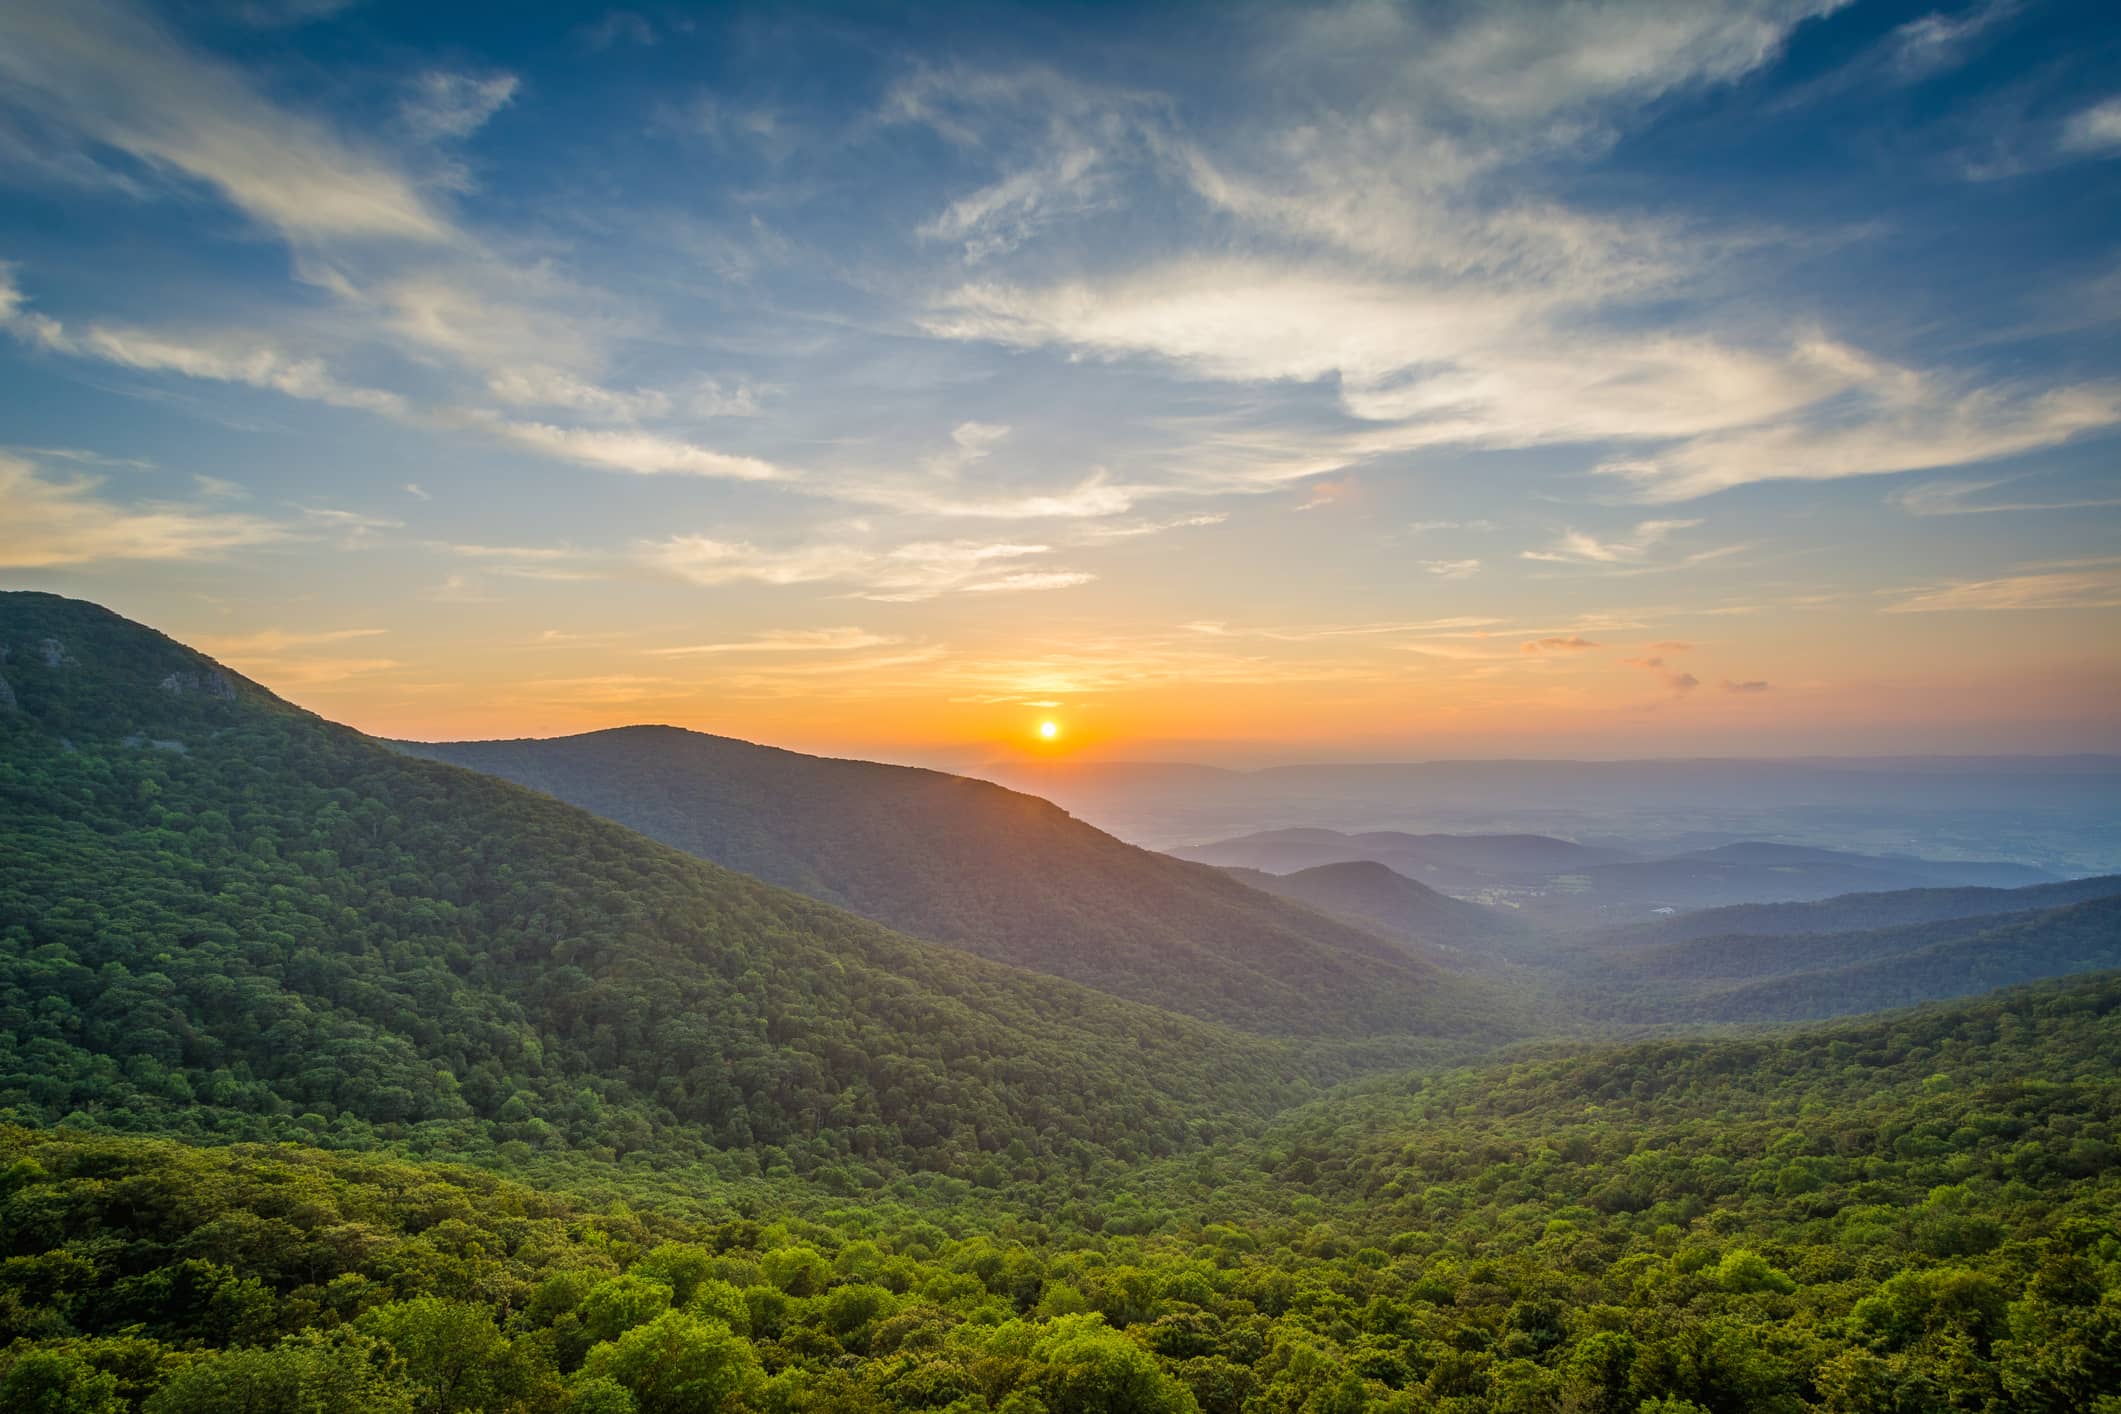 Mountainous Virginia landscape